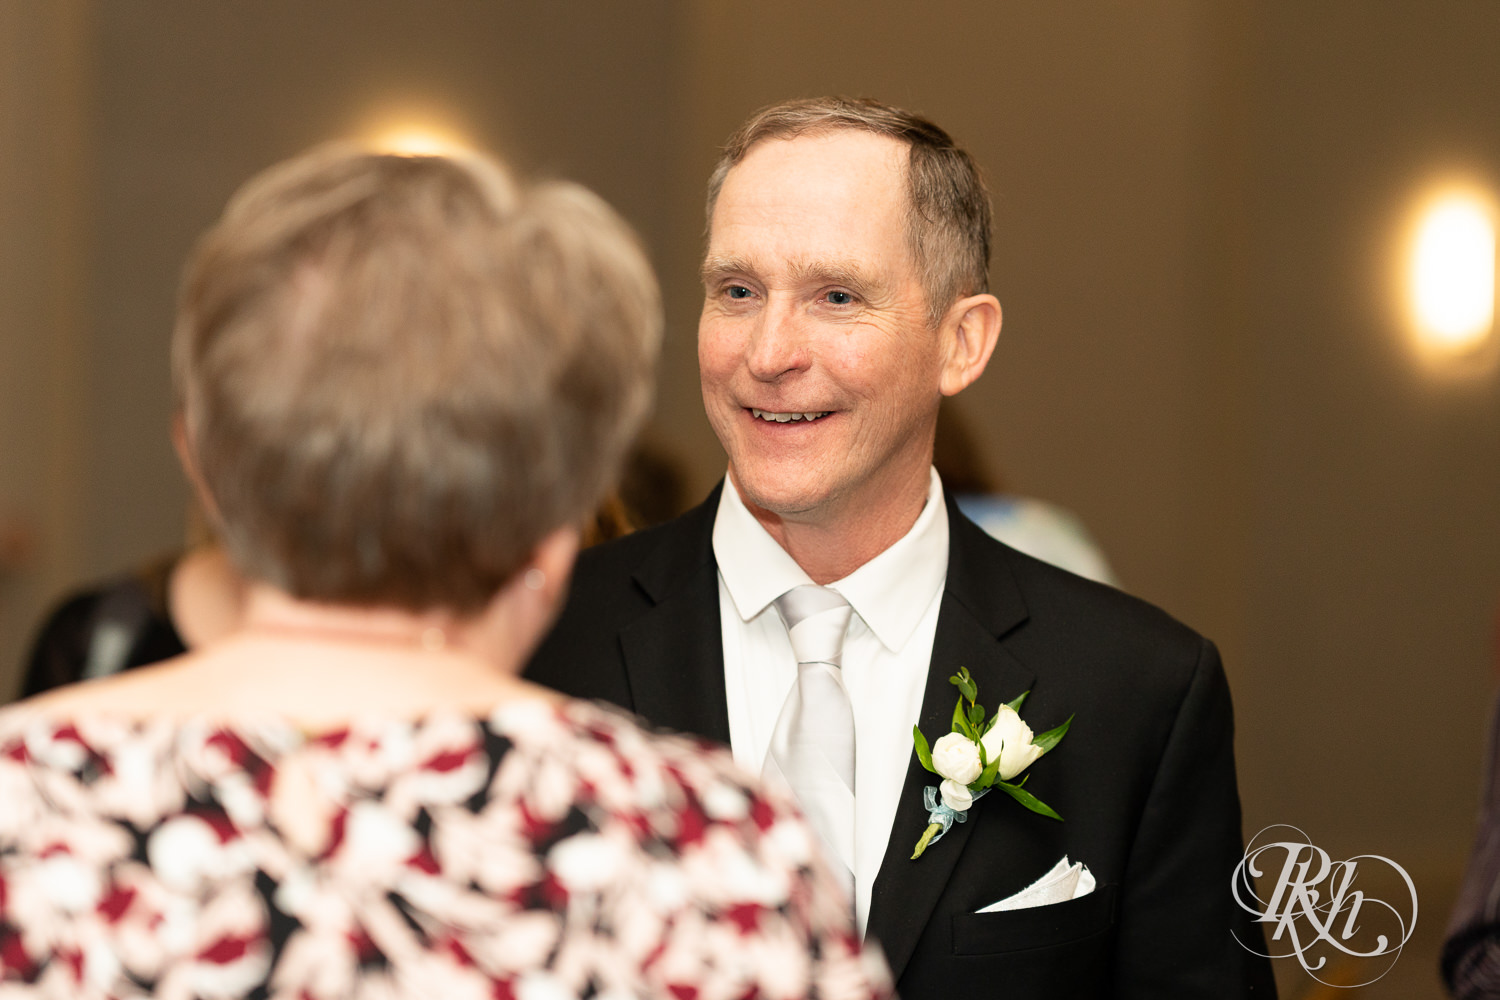 Guests mingle at wedding reception at Doubletree Hilton Saint Paul in Saint Paul, Minnesota.